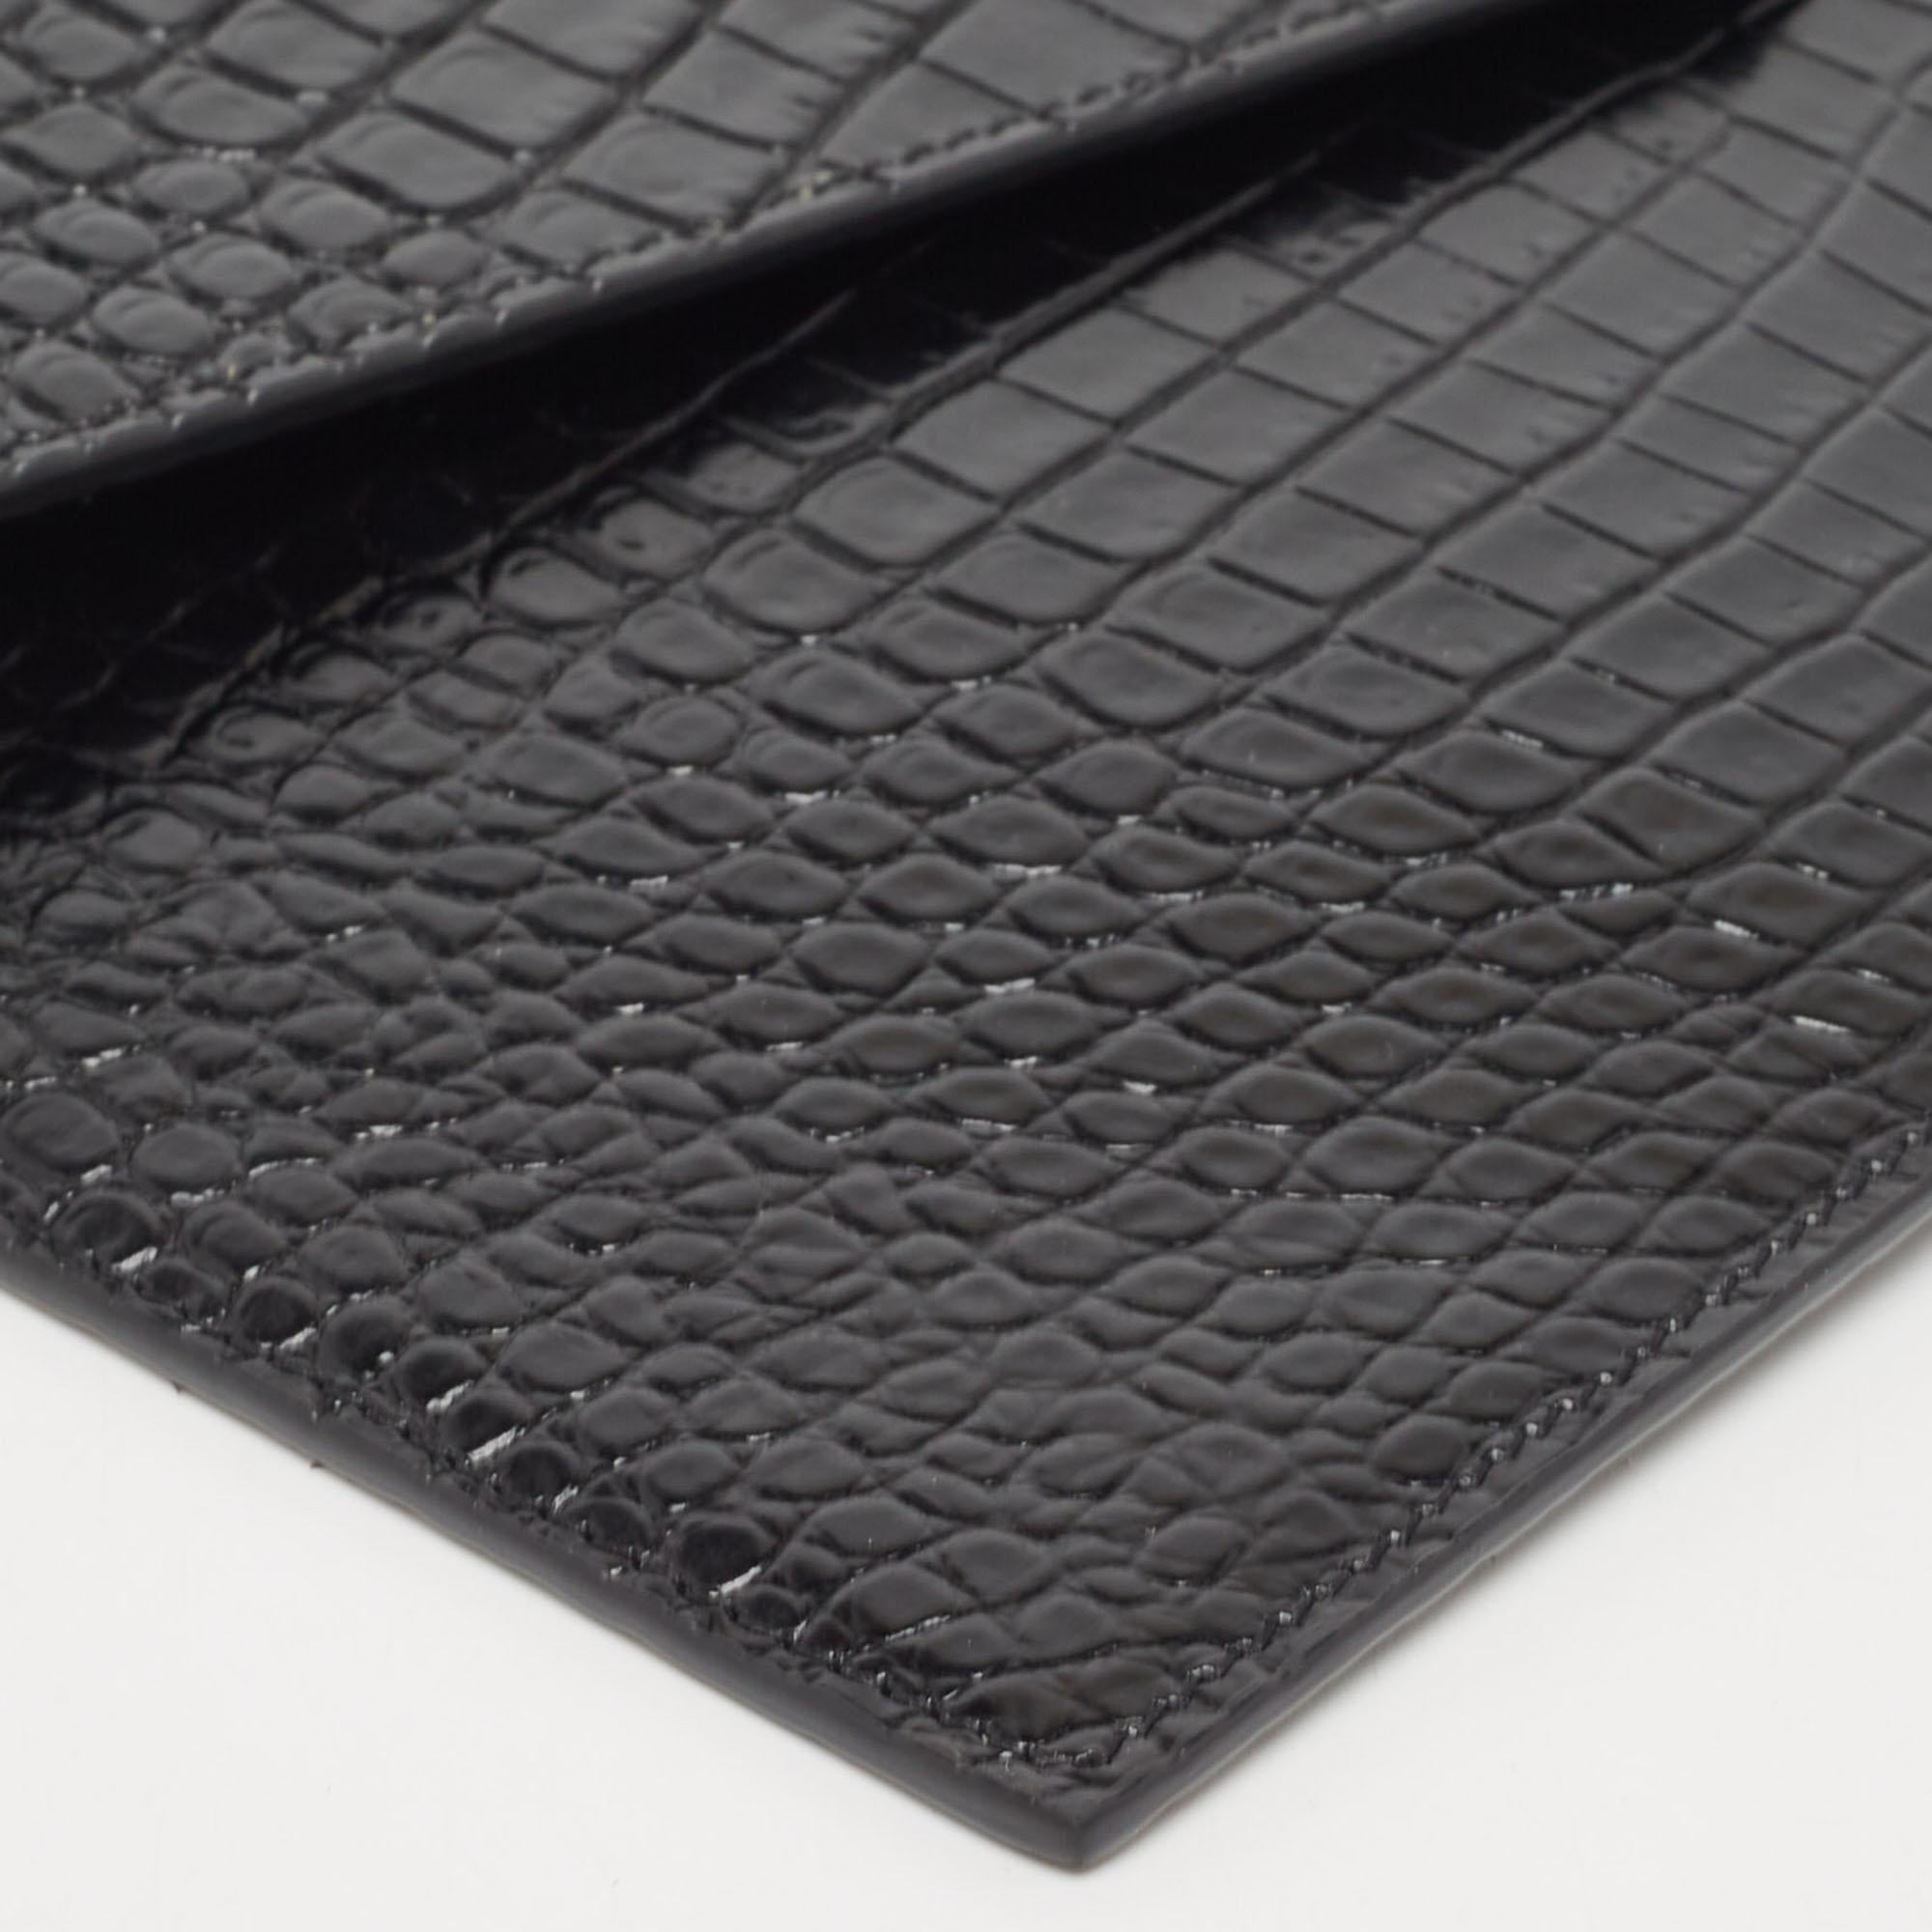 Saint Laurent Black Croc Embossed Leather Uptown Clutch 2